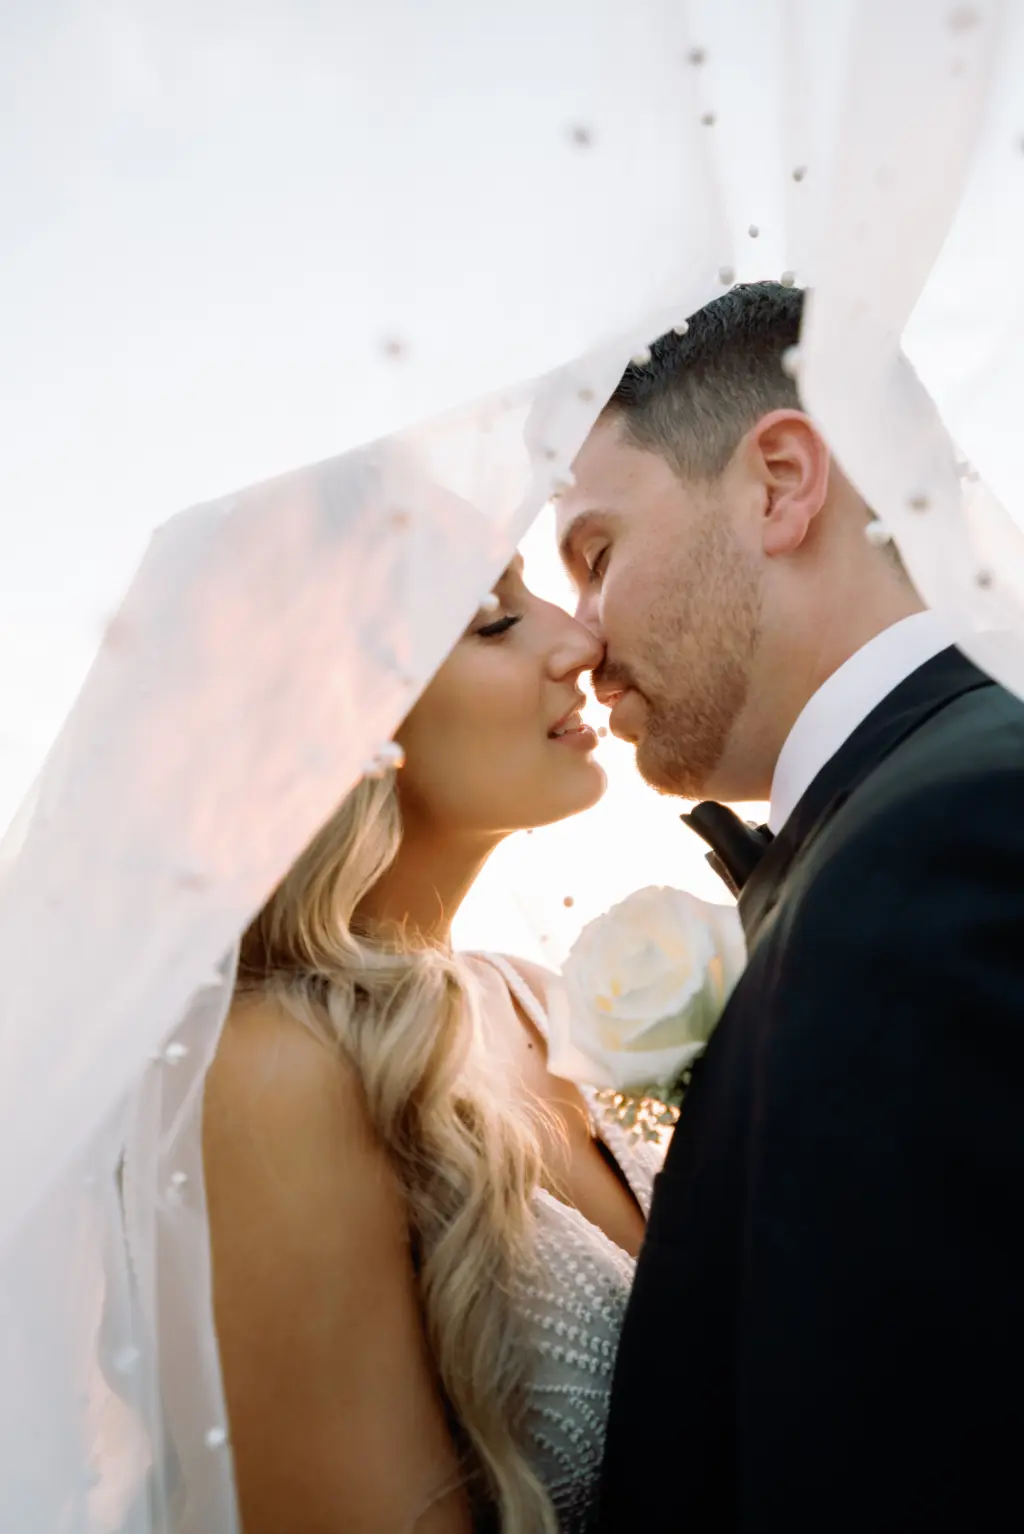 Intimate Bride and Groom Sunset Wedding Veil Portrait | Sarasota Photographer Dewitt For Love